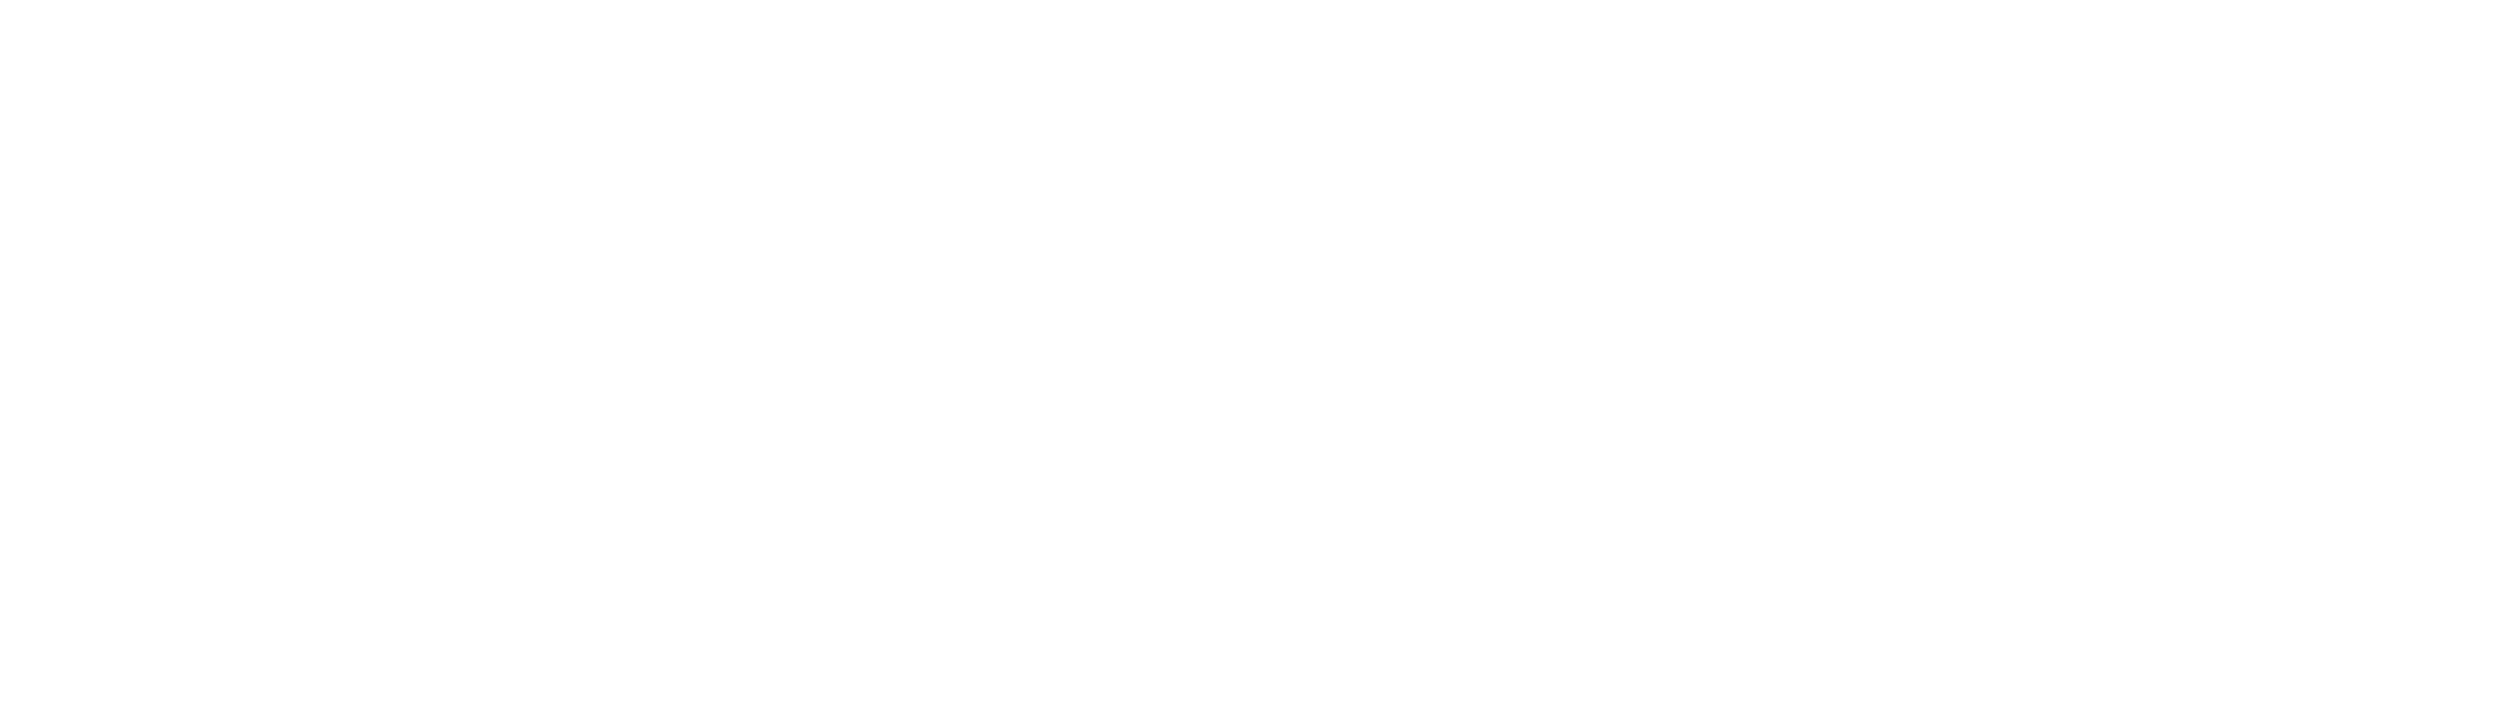 hololens_logo.png